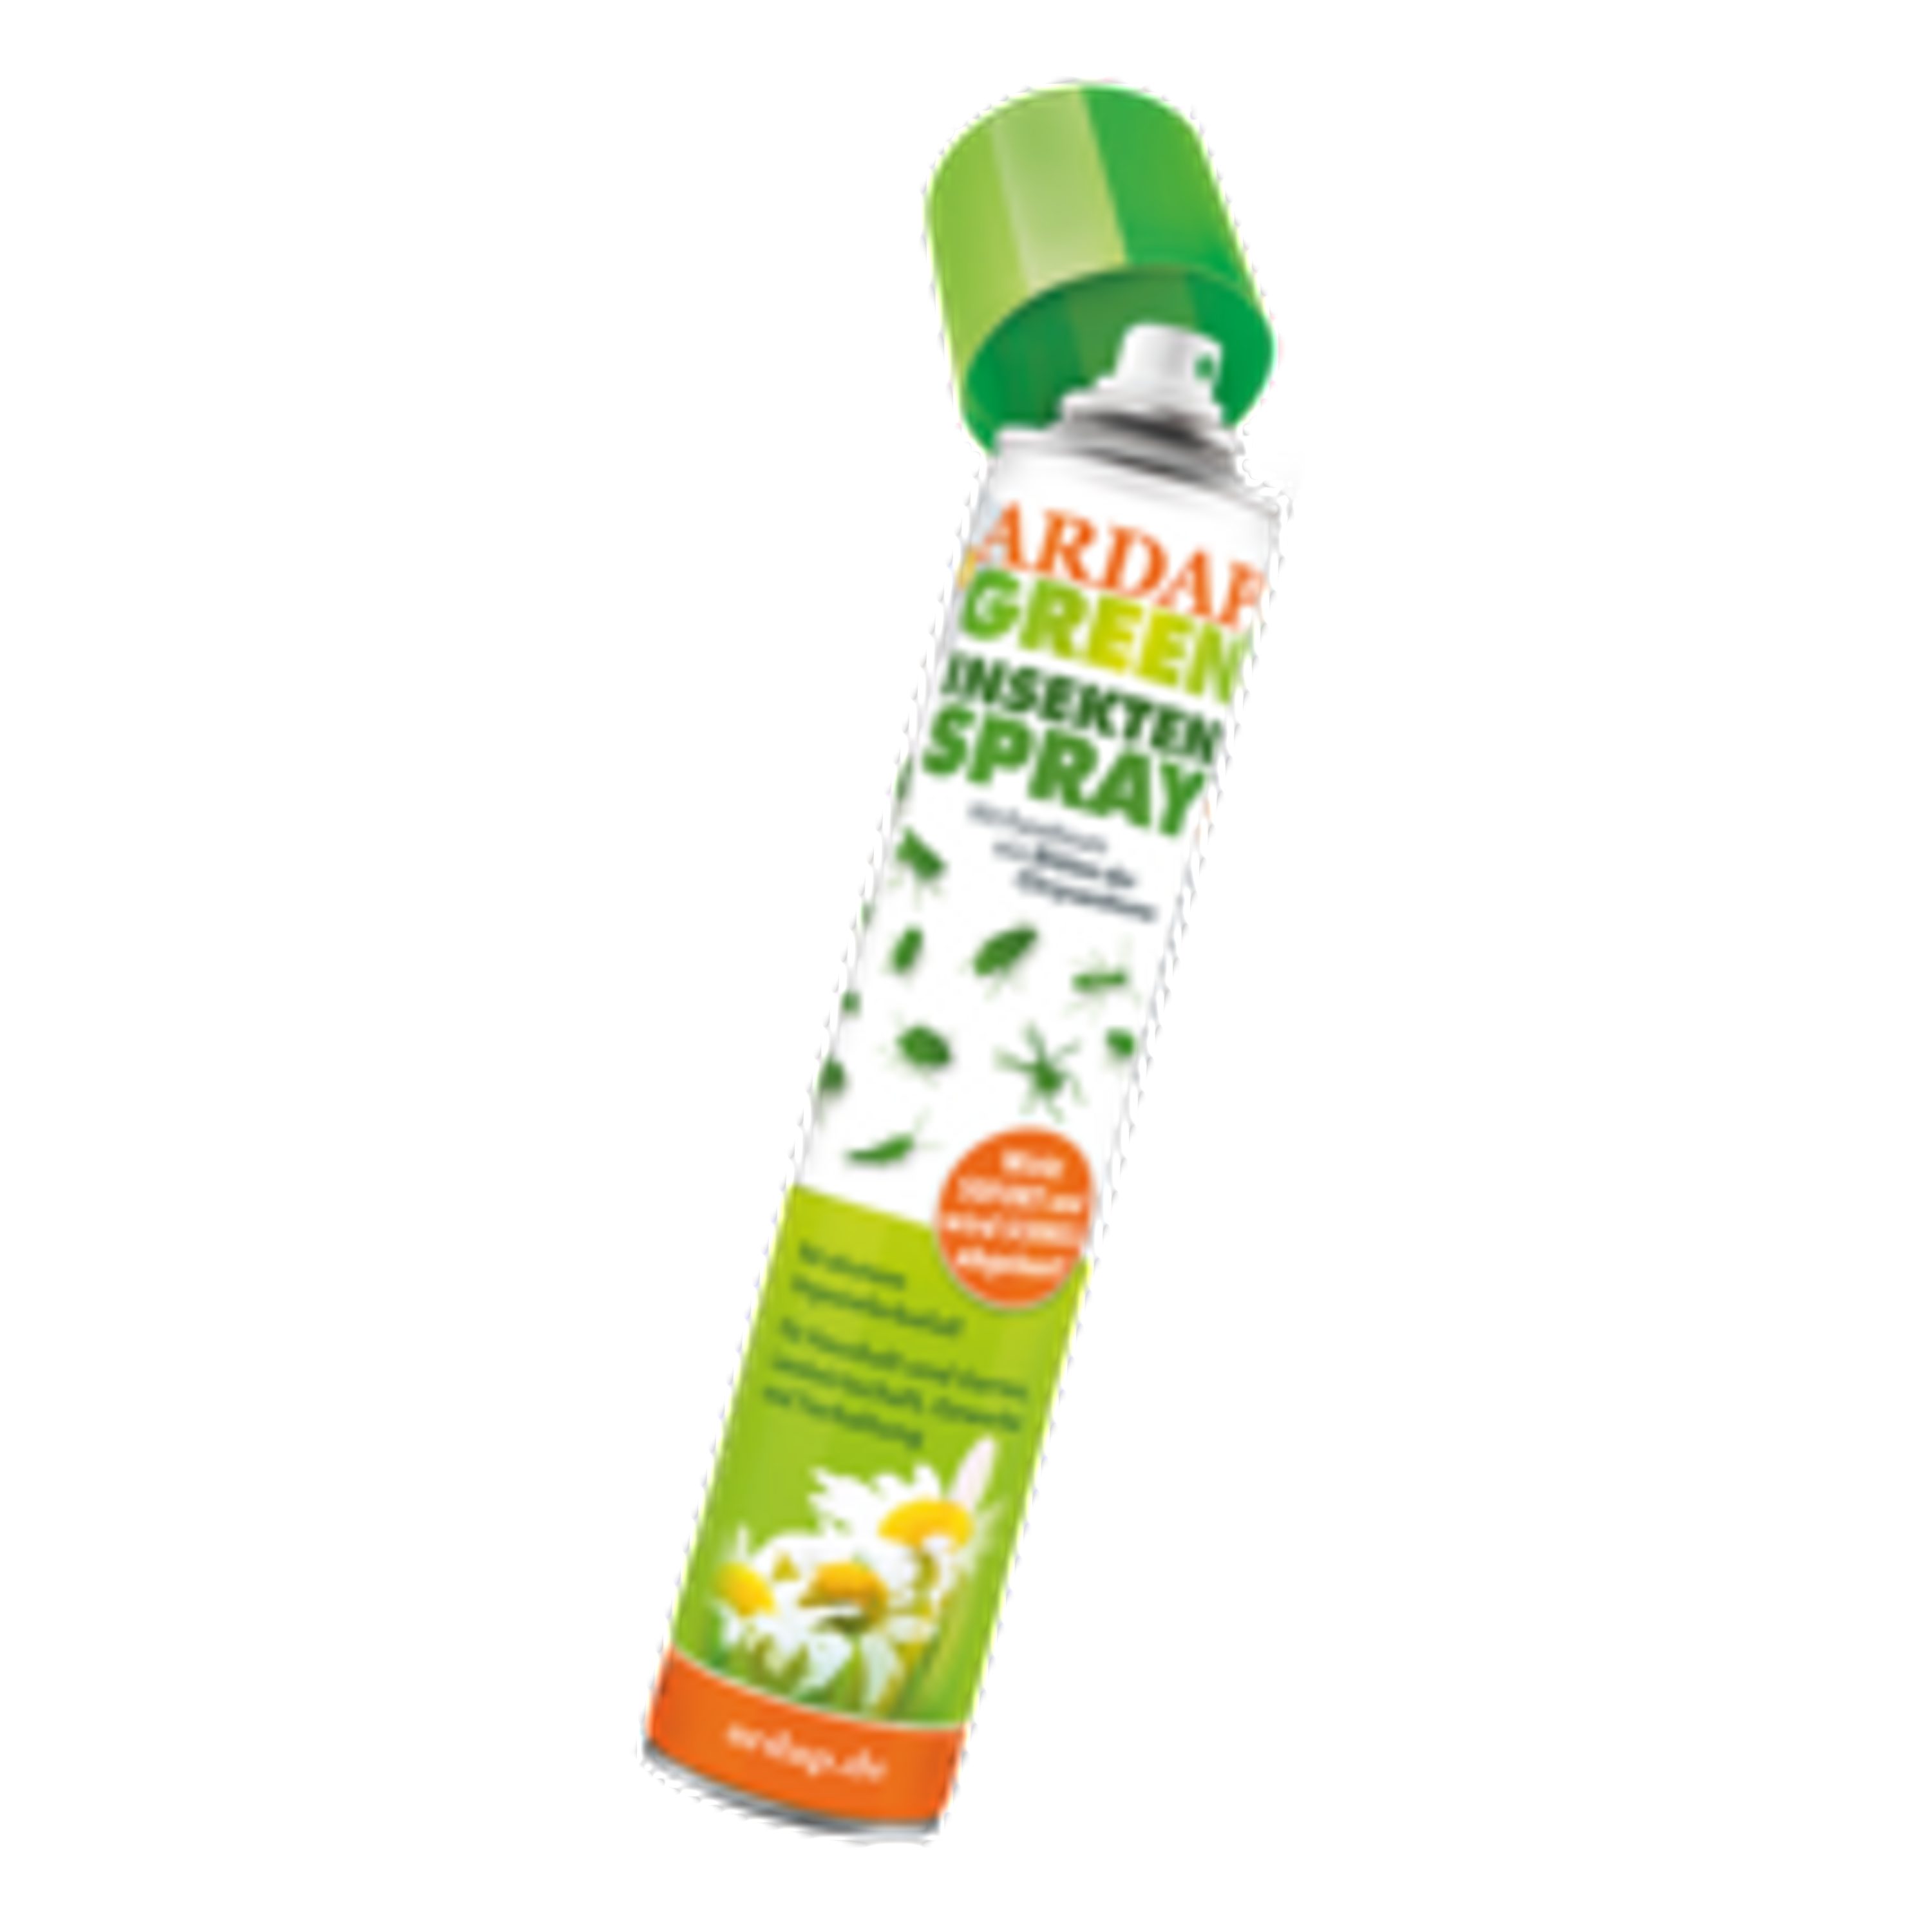 Ardap Insektenspray Green Ardap ml +++ +++ Spray 750 Insekten